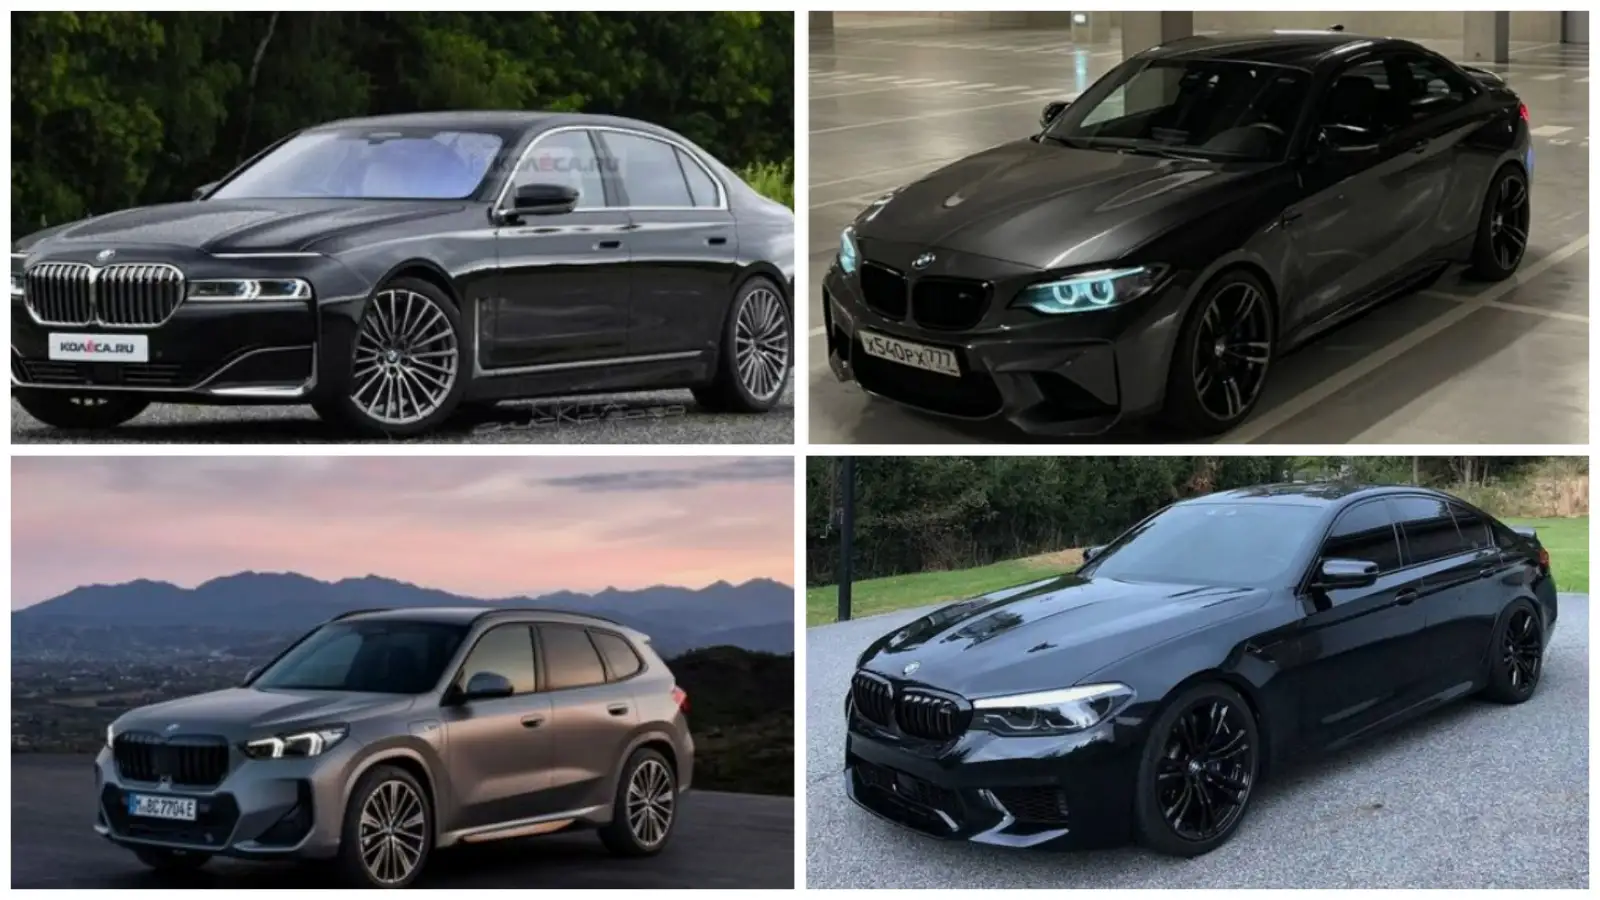 Top 7 Reputable BMW Vehicle Models